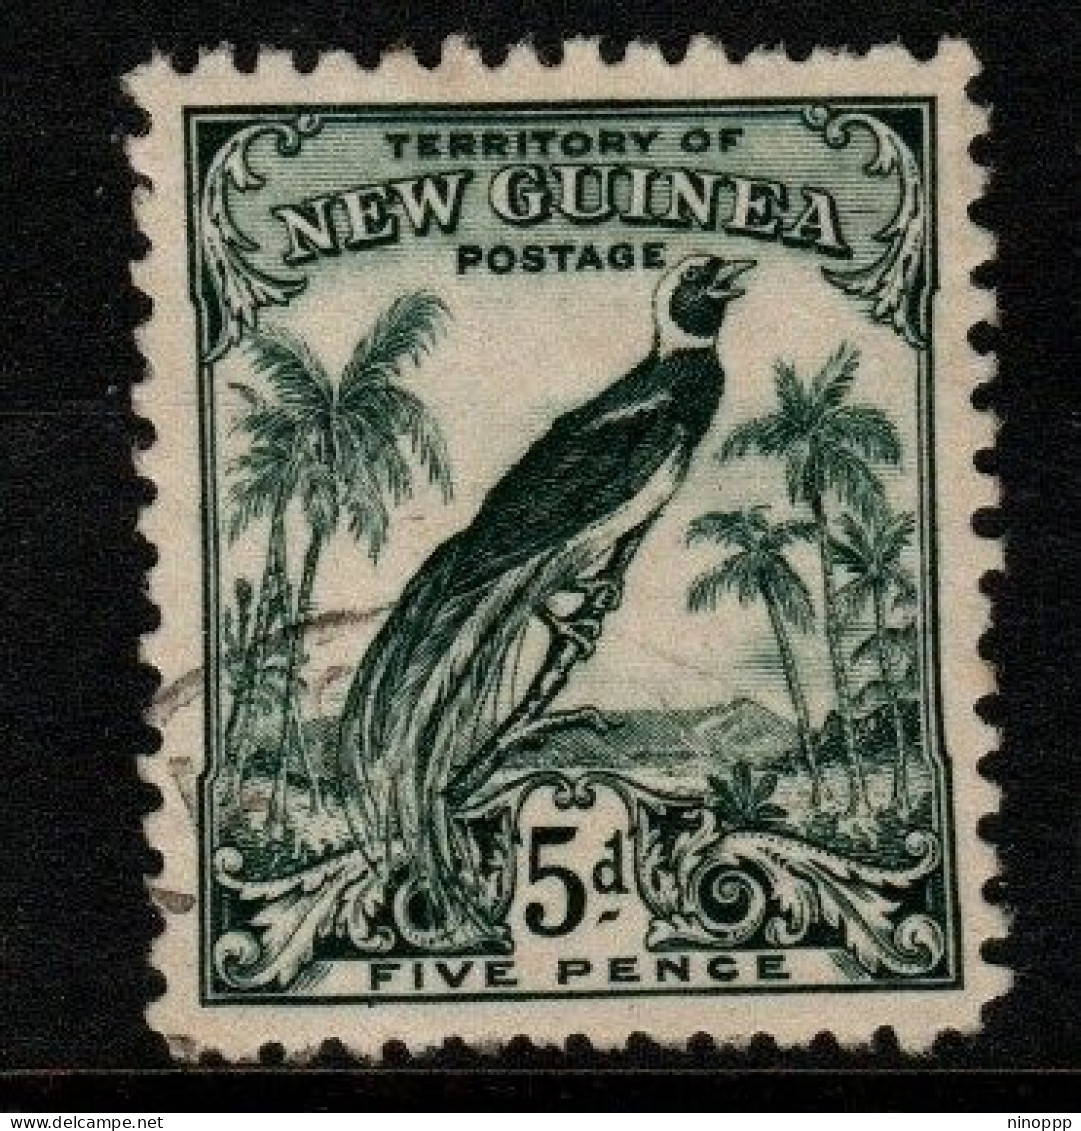 New Guinea SG 182 1931 Raggiana Bird No Date 5d Deep Blur-green Used - Papua New Guinea